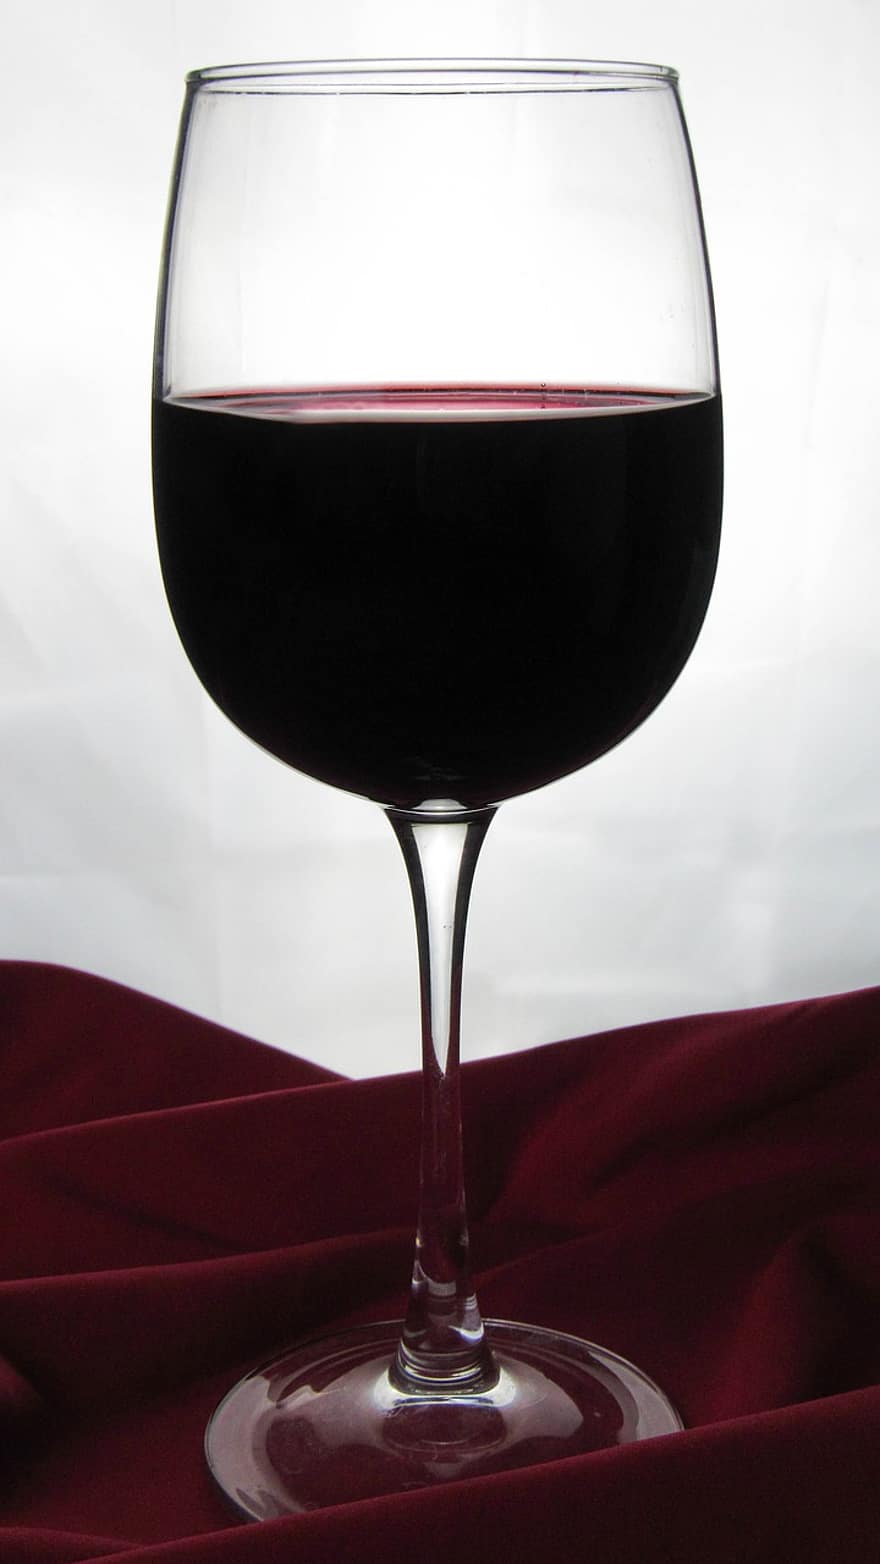 Wine, Wineglass, Alcohol, Glass, Red Wine, Drink, Liquor, Booze, drinking glass, liquid, close-up